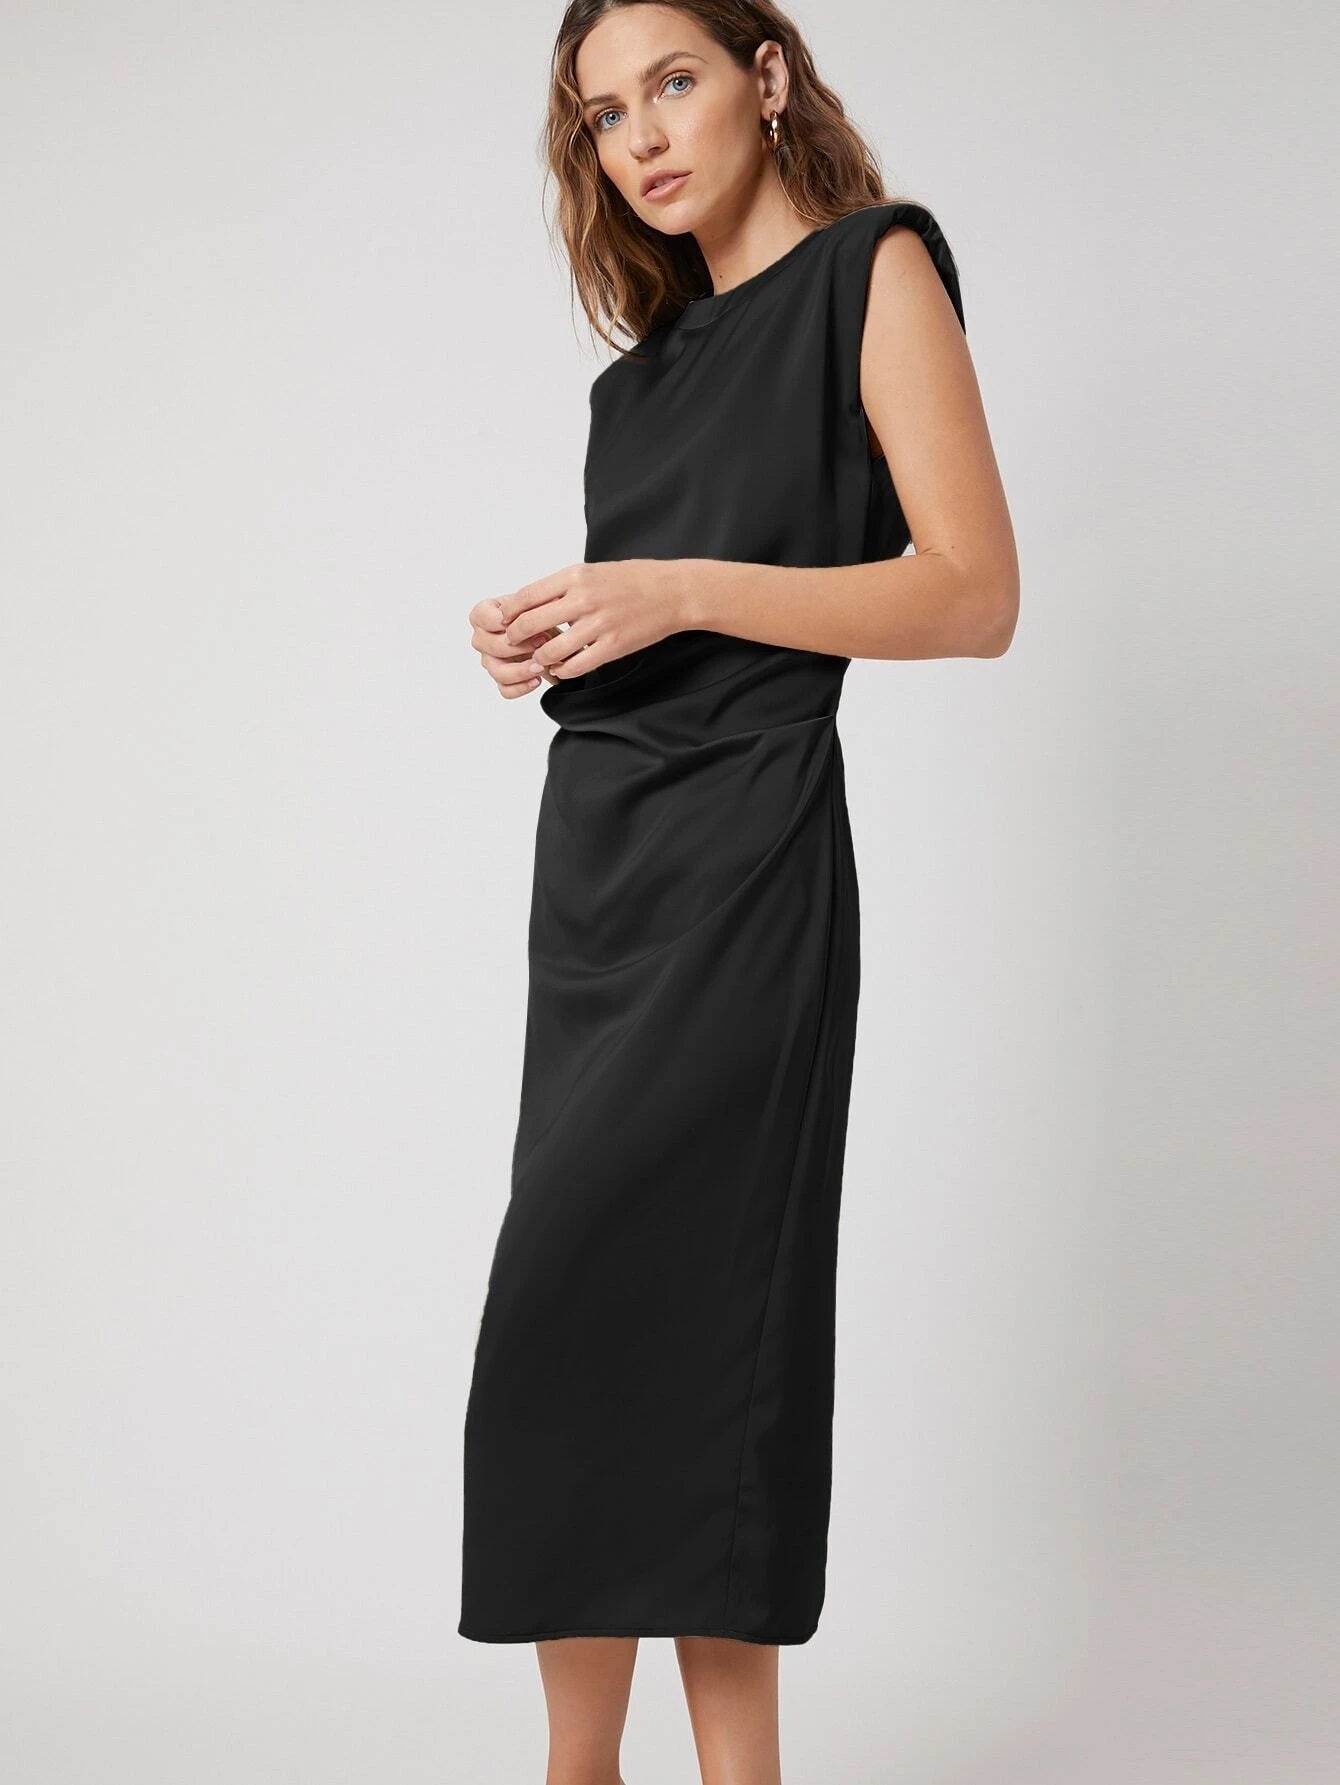 CM-DS257342 Women Elegant Seoul Style Sleeveless Fitted Shoulder Pad Dress - Black